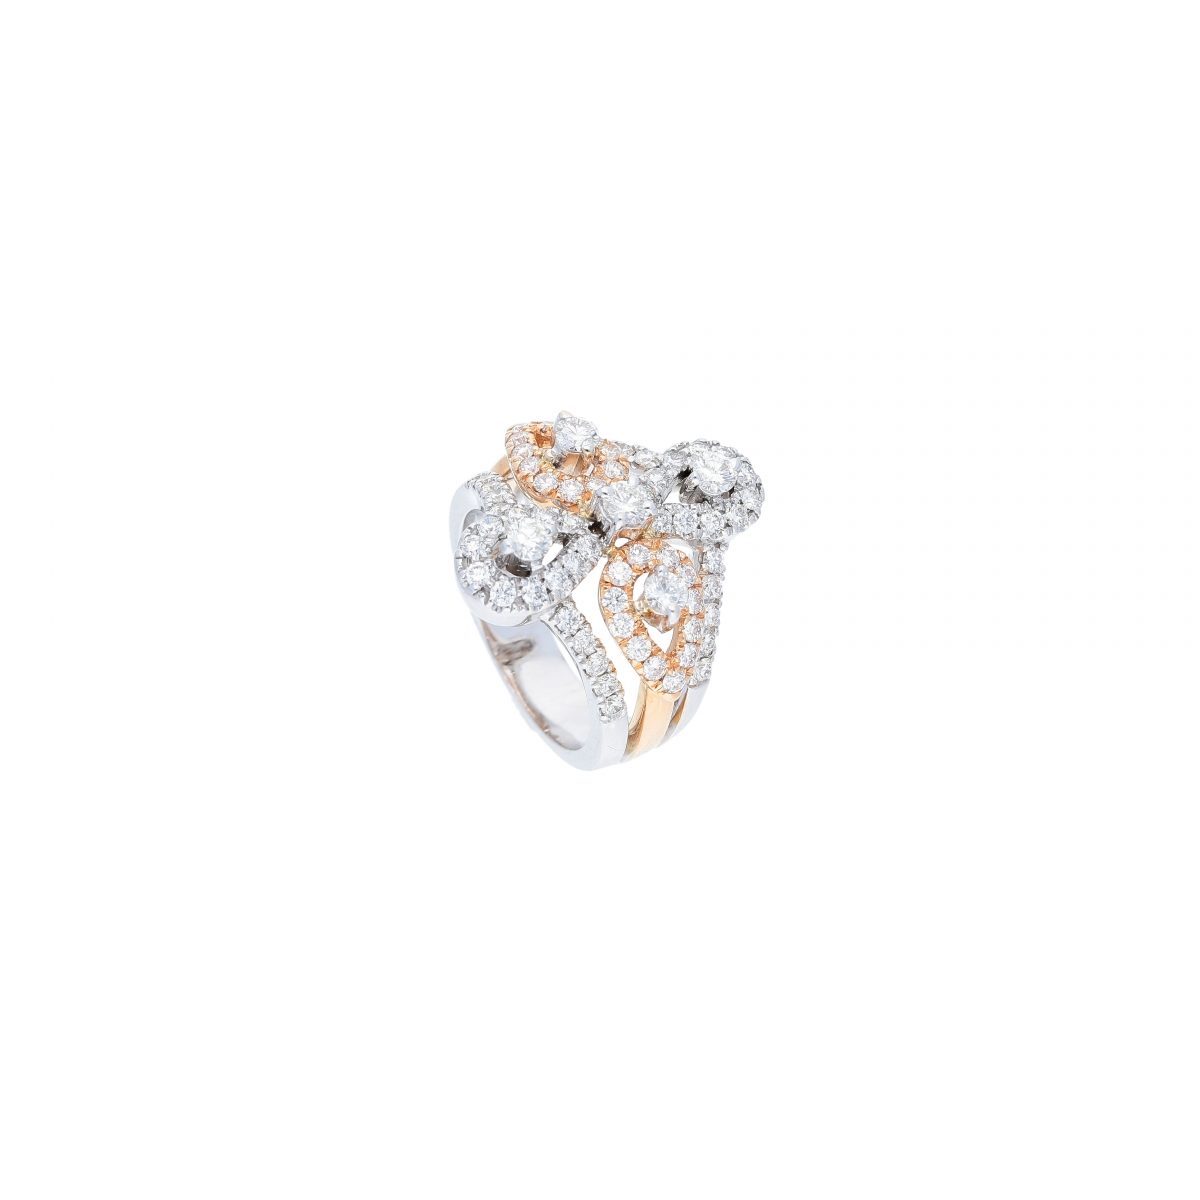 Idylle Blossom bracelet, 3 golds and diamonds - Jewelry - Categories